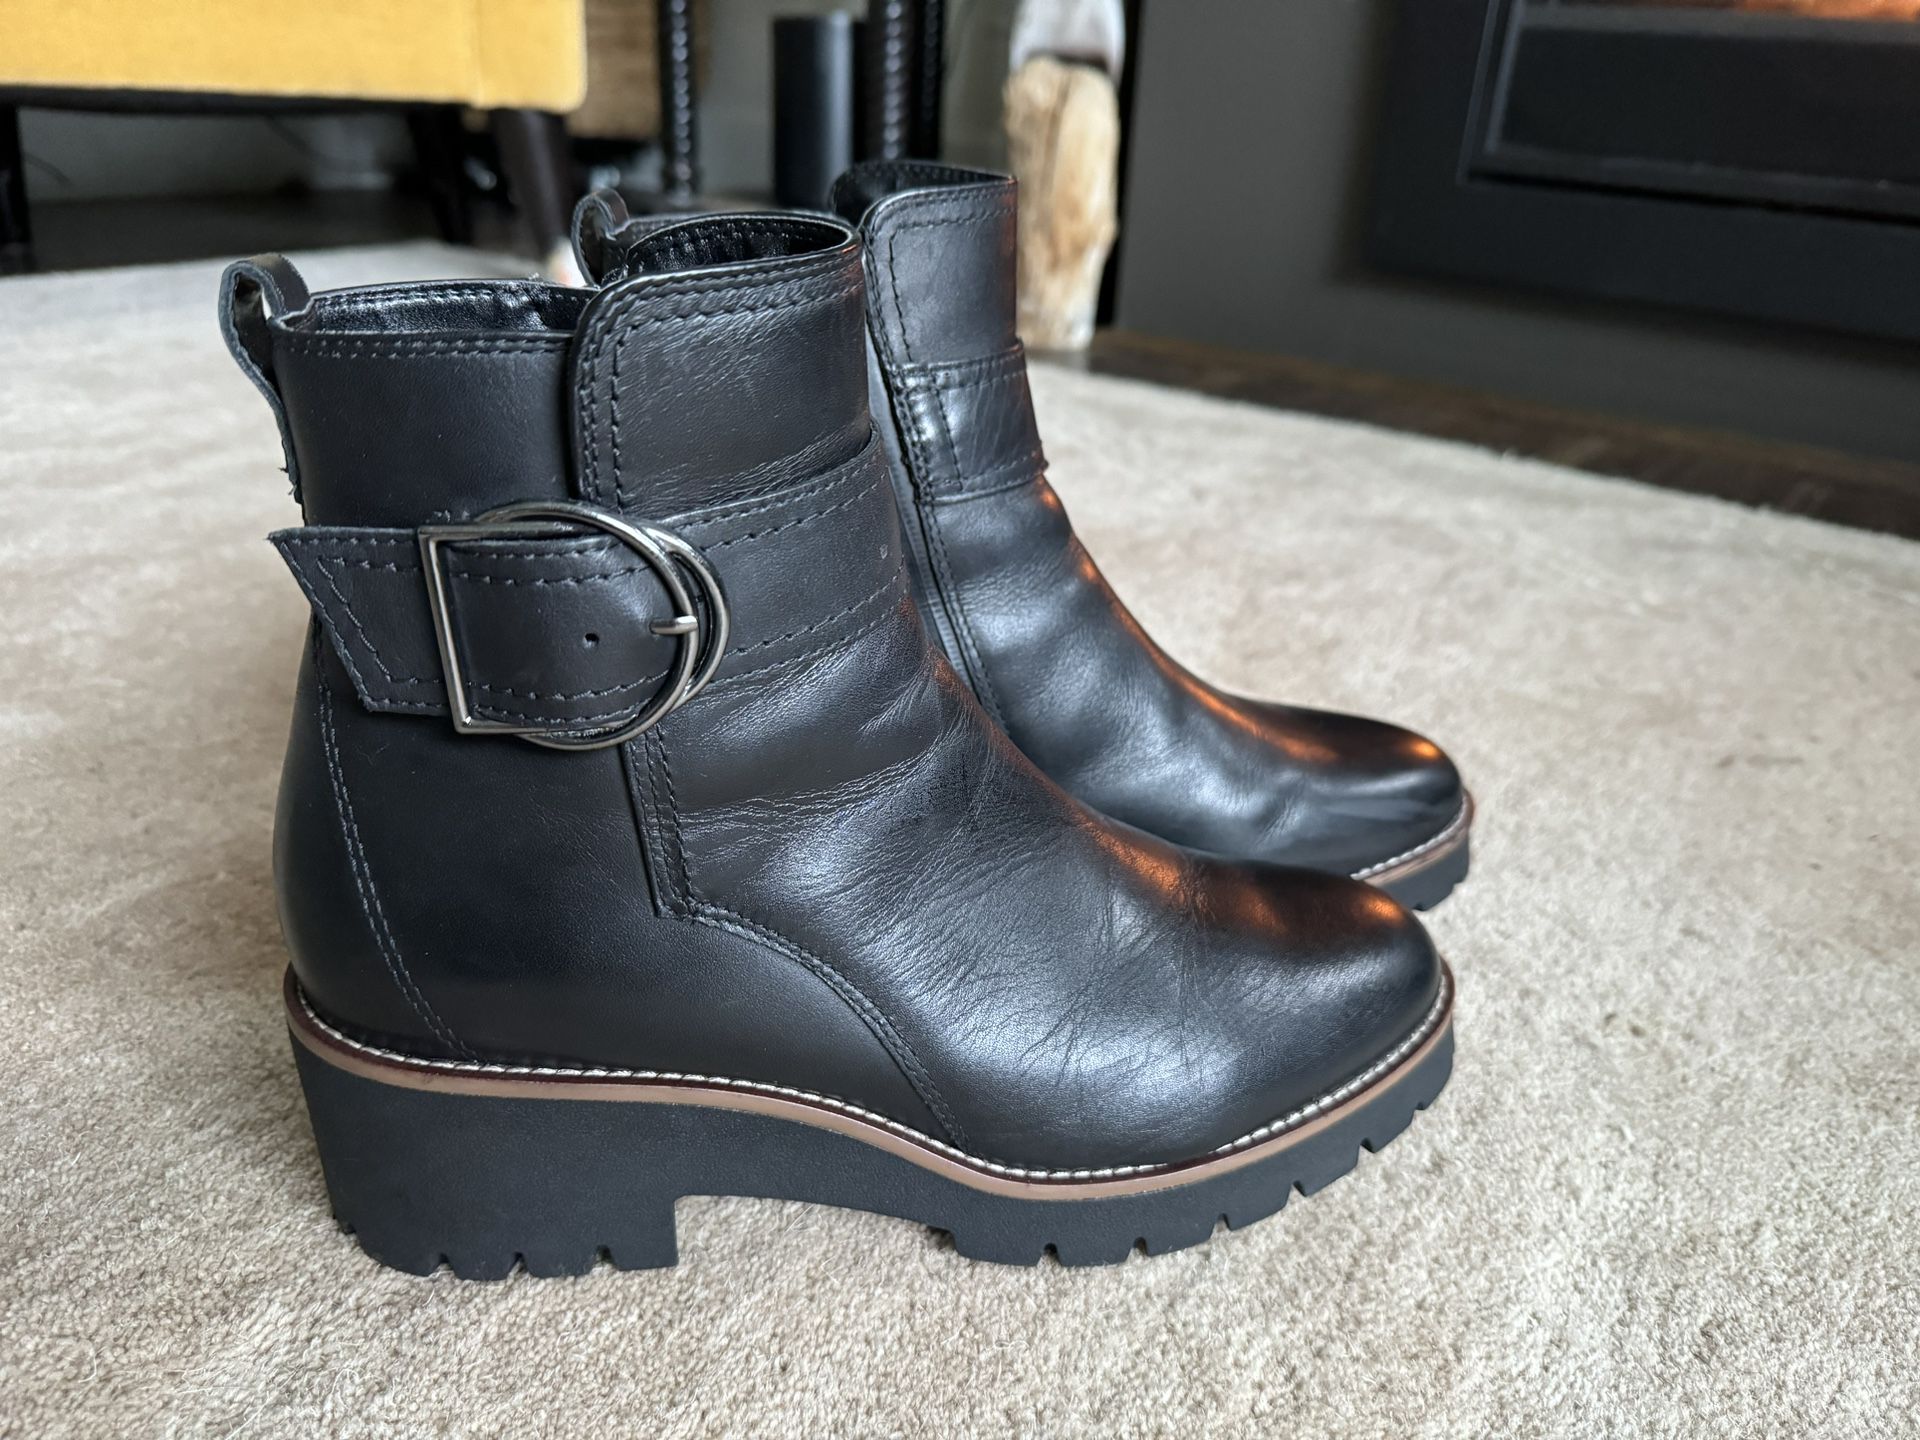 Black Boots $15